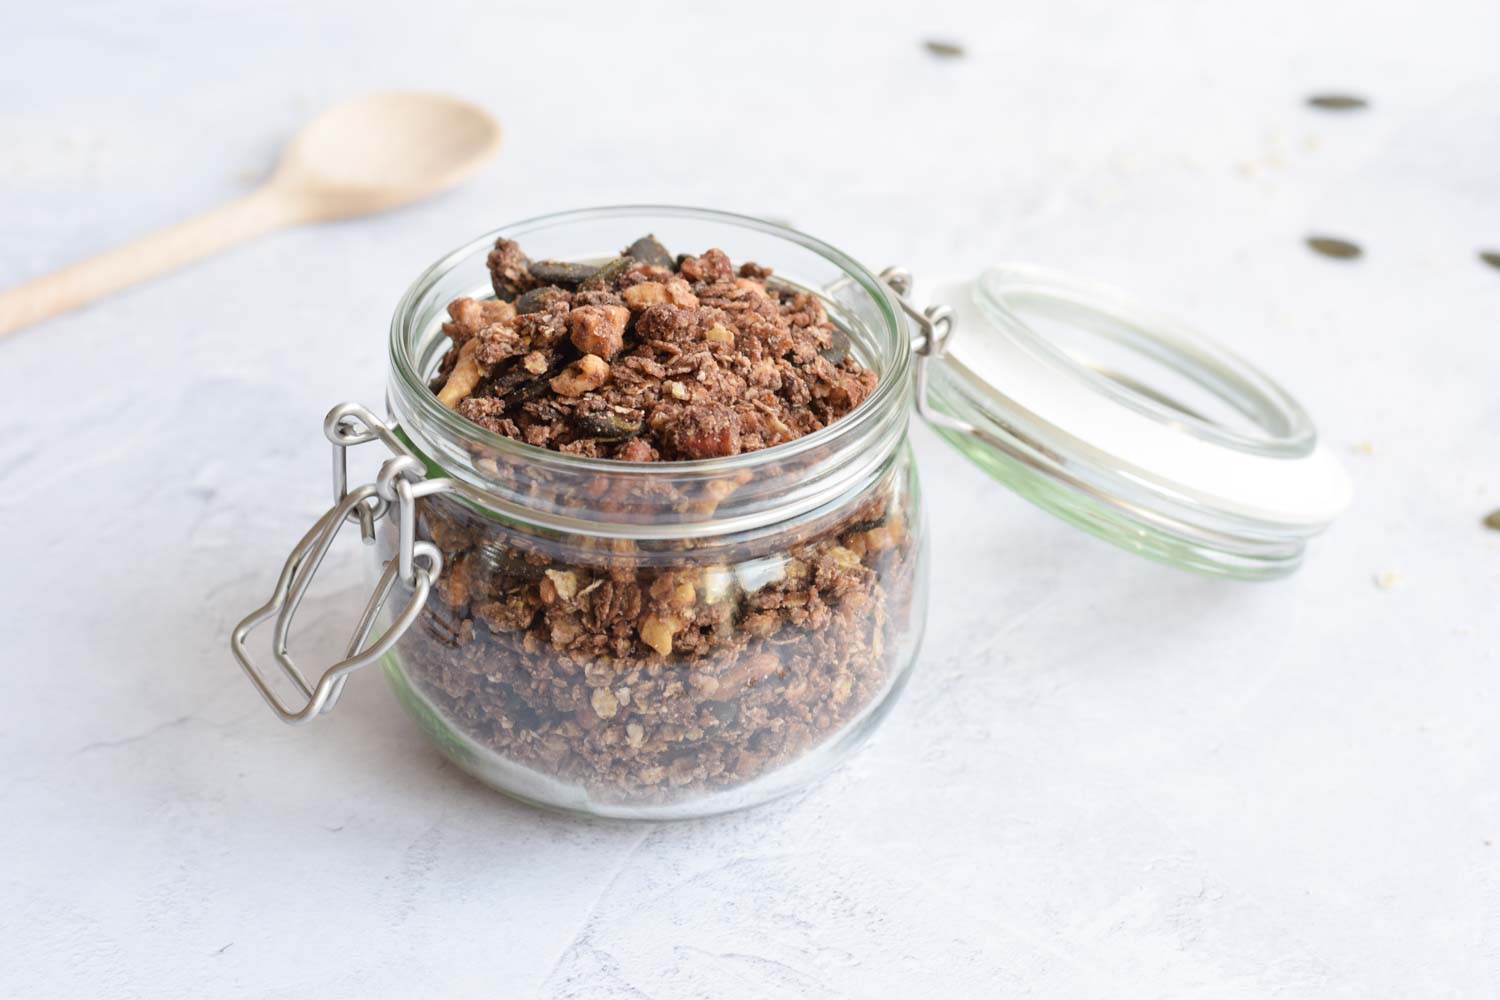 A jar with gluten-free chocolate buckwheat granola